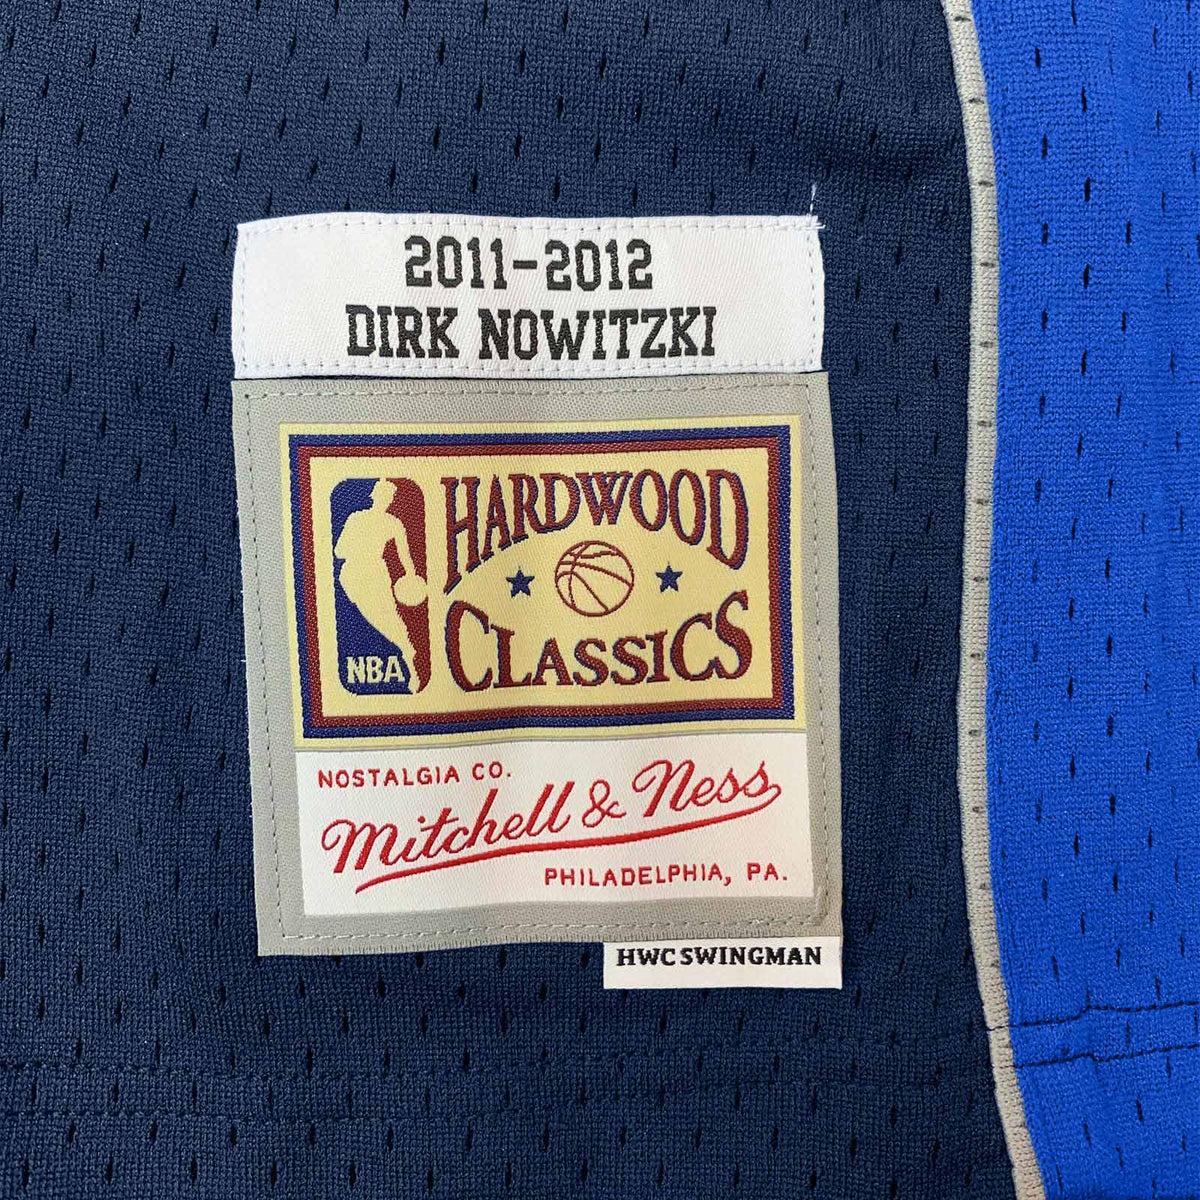 Vintage Dallas Mavericks Dirk Nowitzki Reebok Jersey Size Large